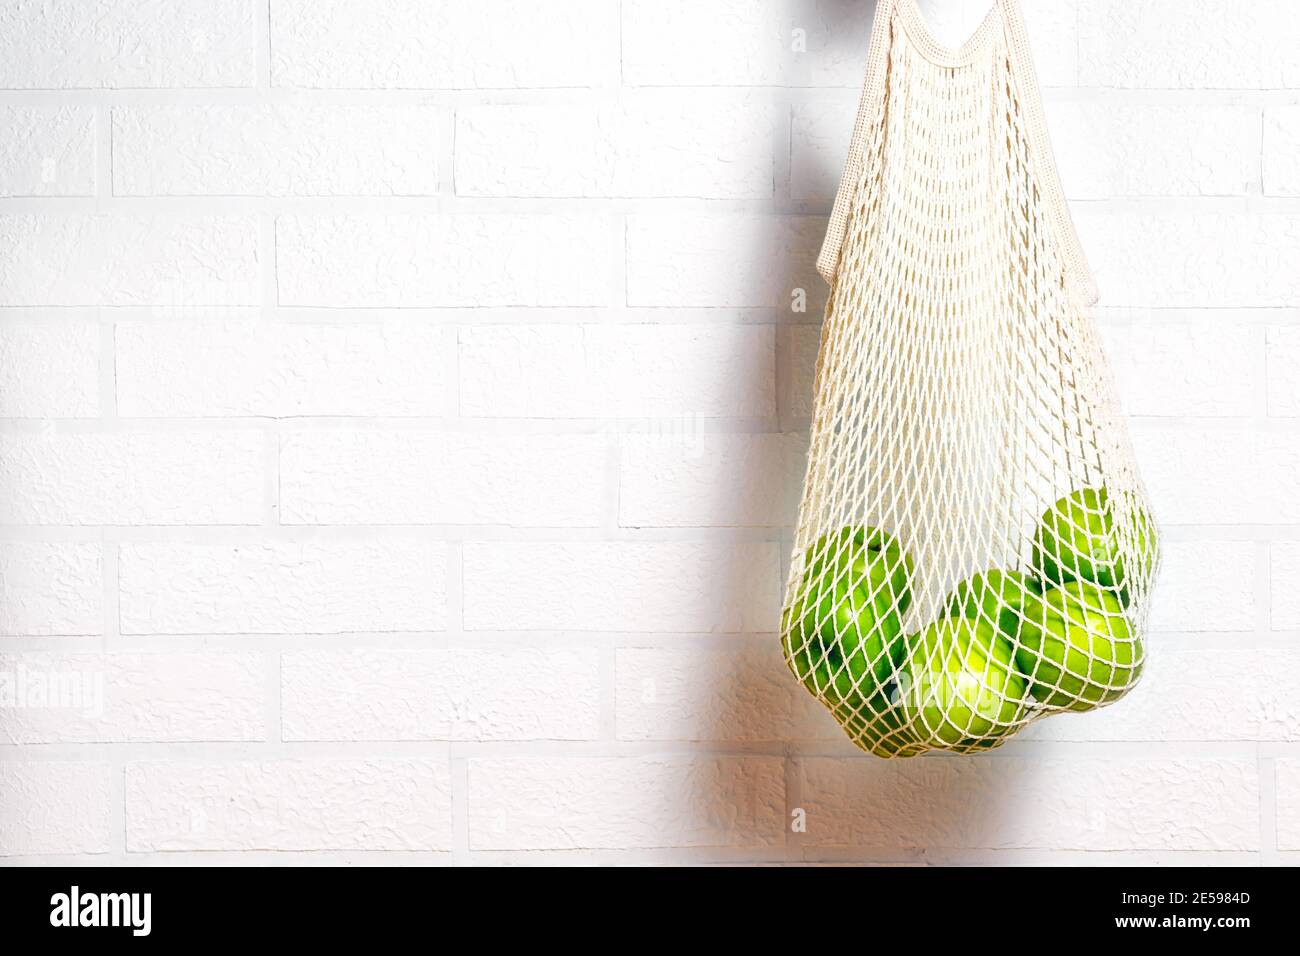 Fresh green apples in eco natural reusable cotton mesh bag. Zero waste concept. White brick background.  Stock Photo